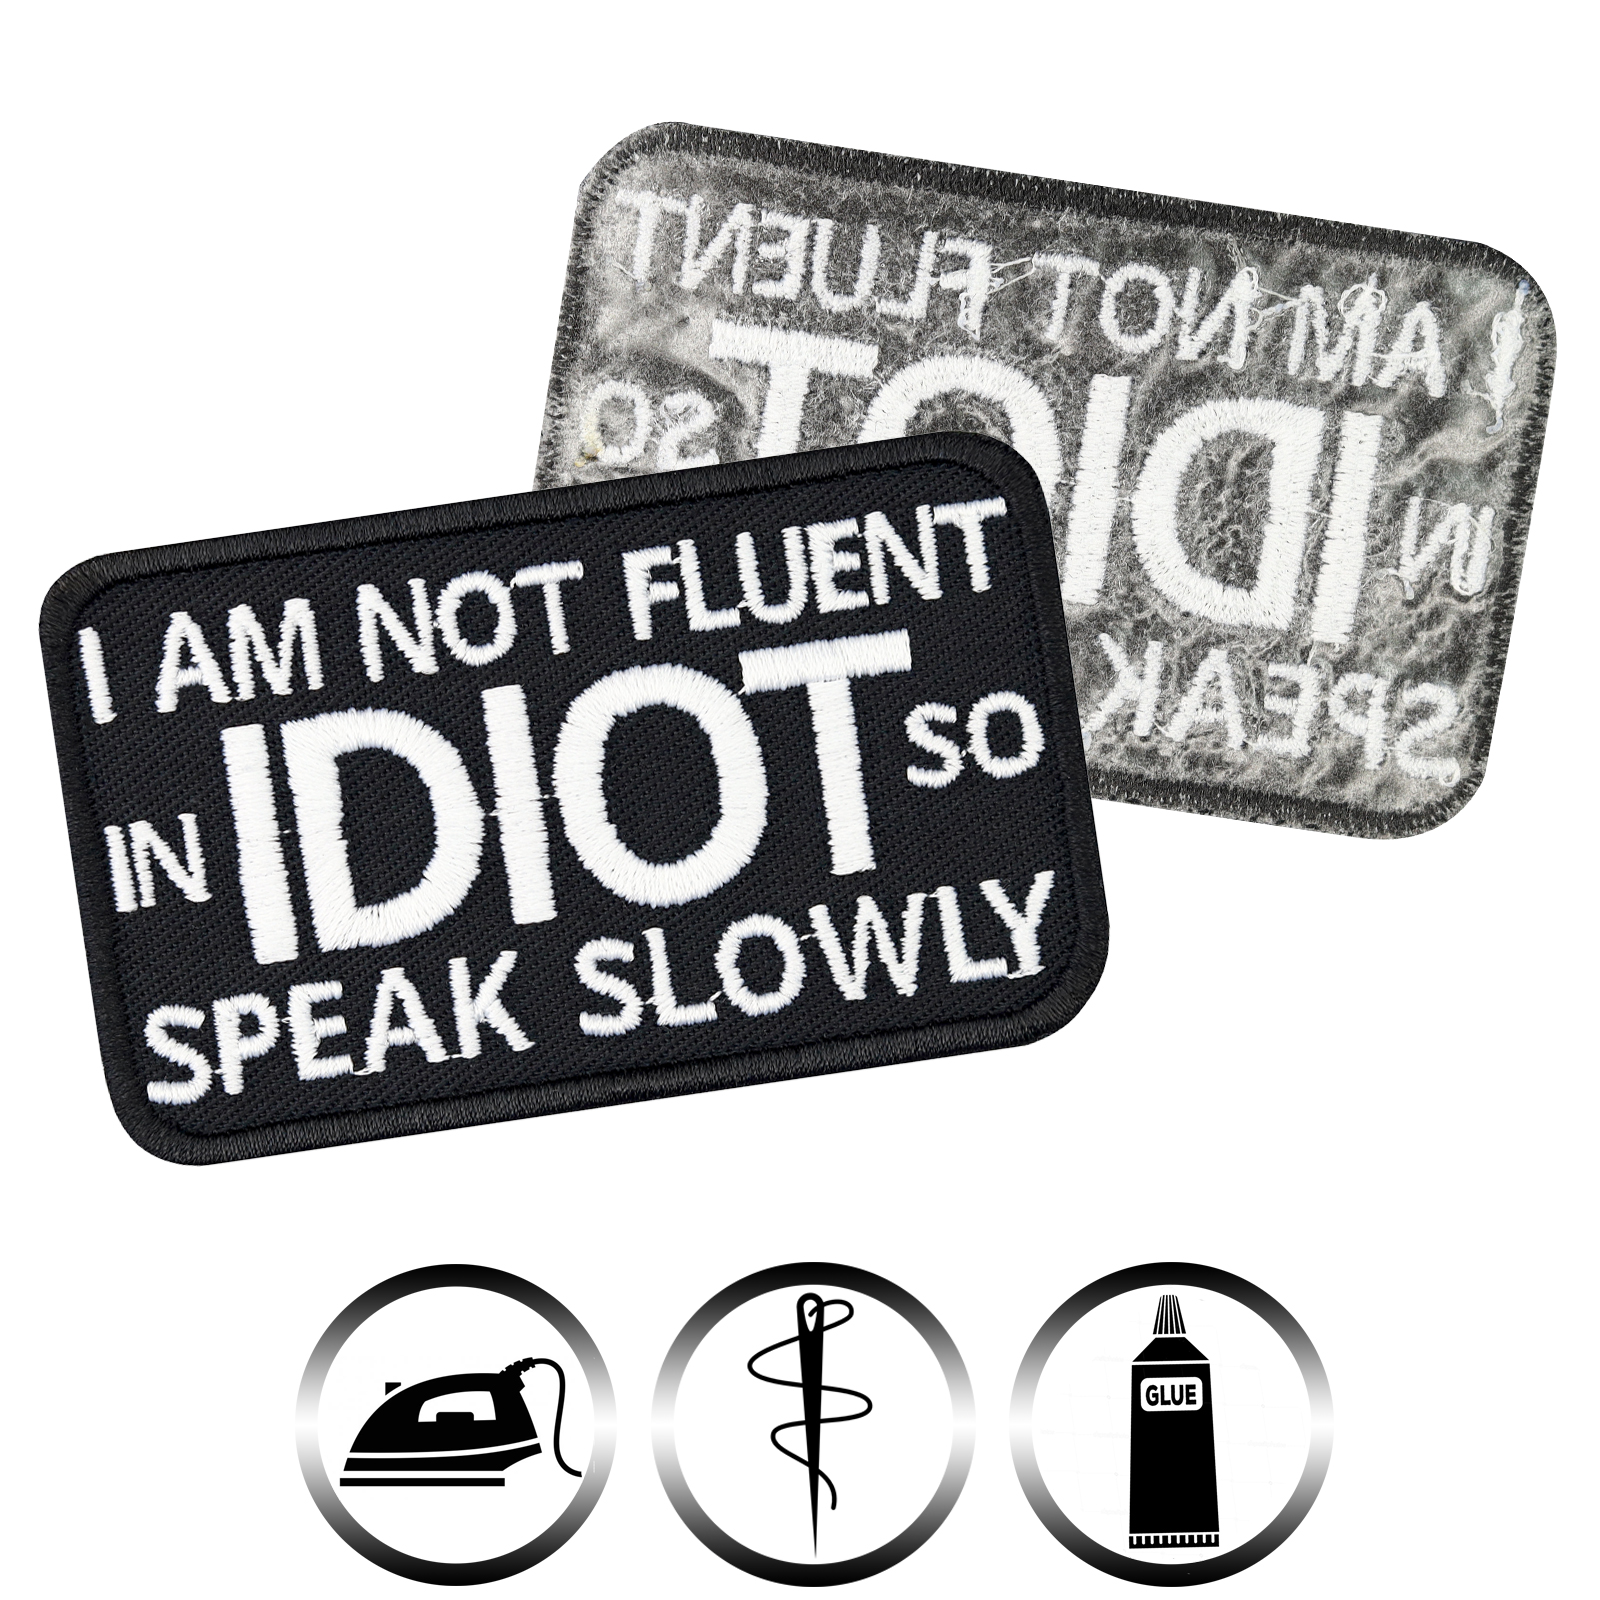 I am not fluent in idiot so speak slowly. - Patch